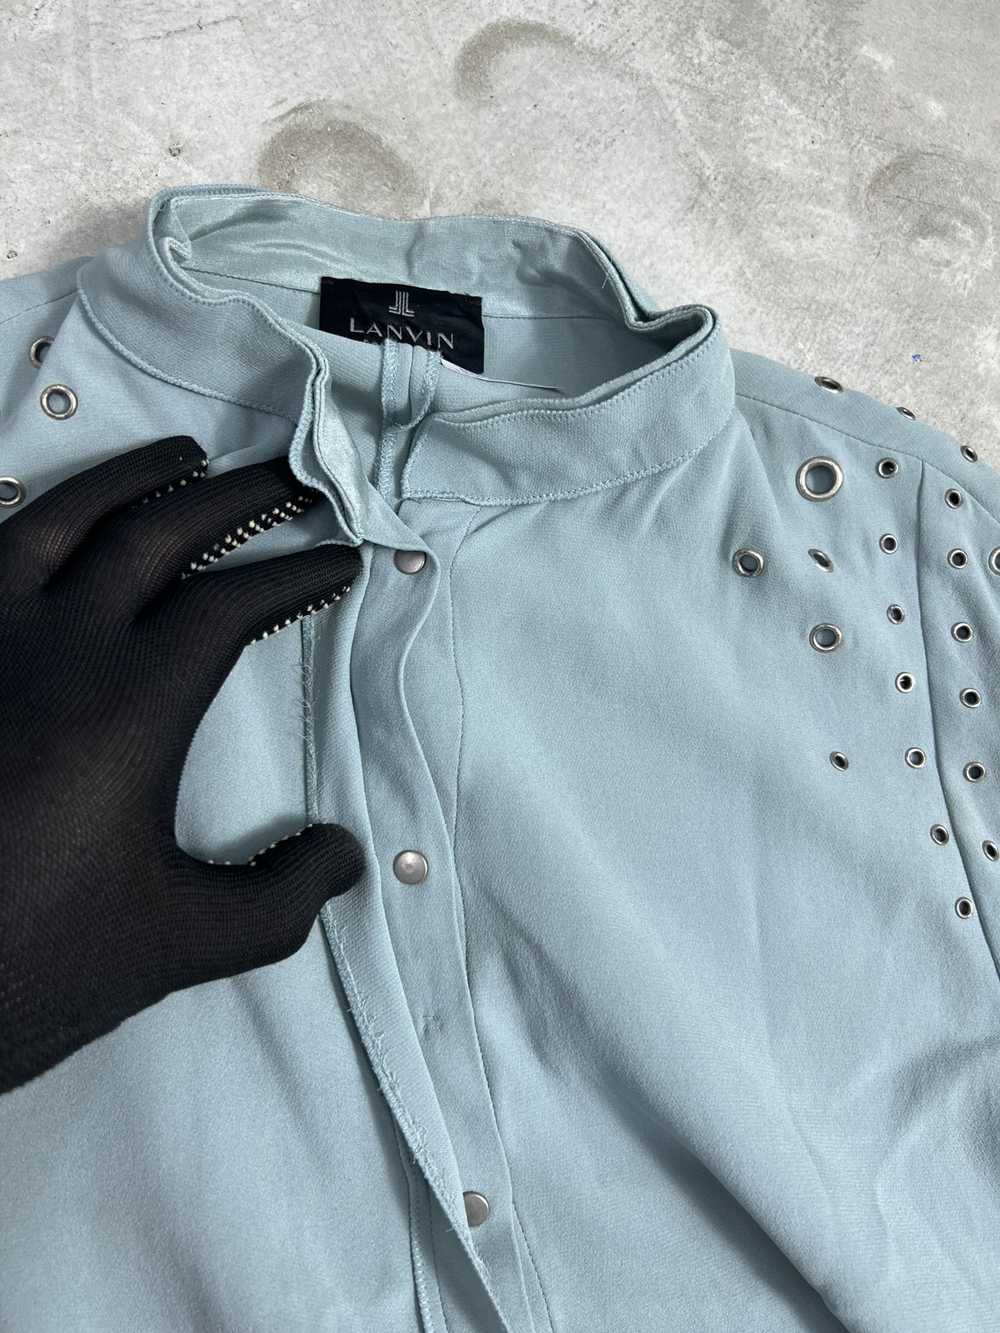 Designer × Lanvin Lanvin Collection Button Up Shi… - image 6